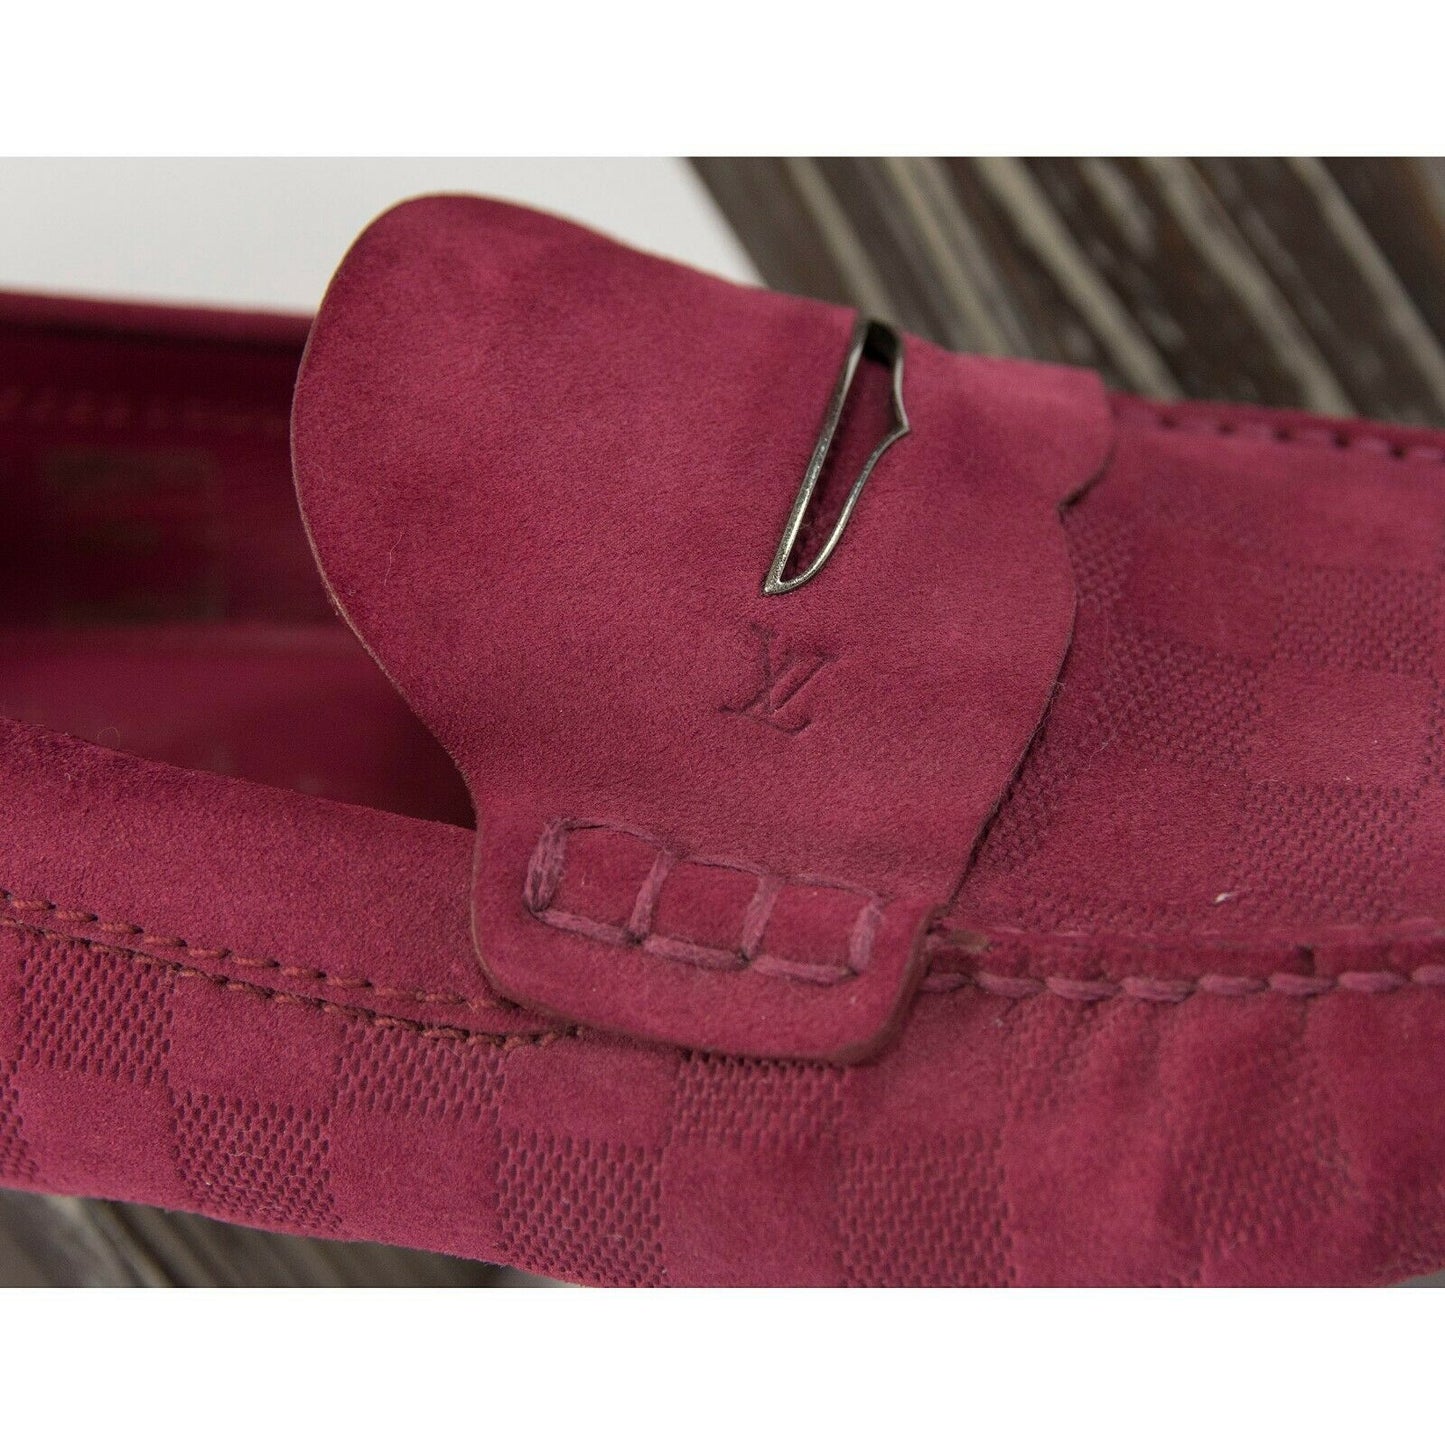 Louis Vuitton Damier Cranberry Suede Vintage Penny Loafer Driving Moccasin Sz 12